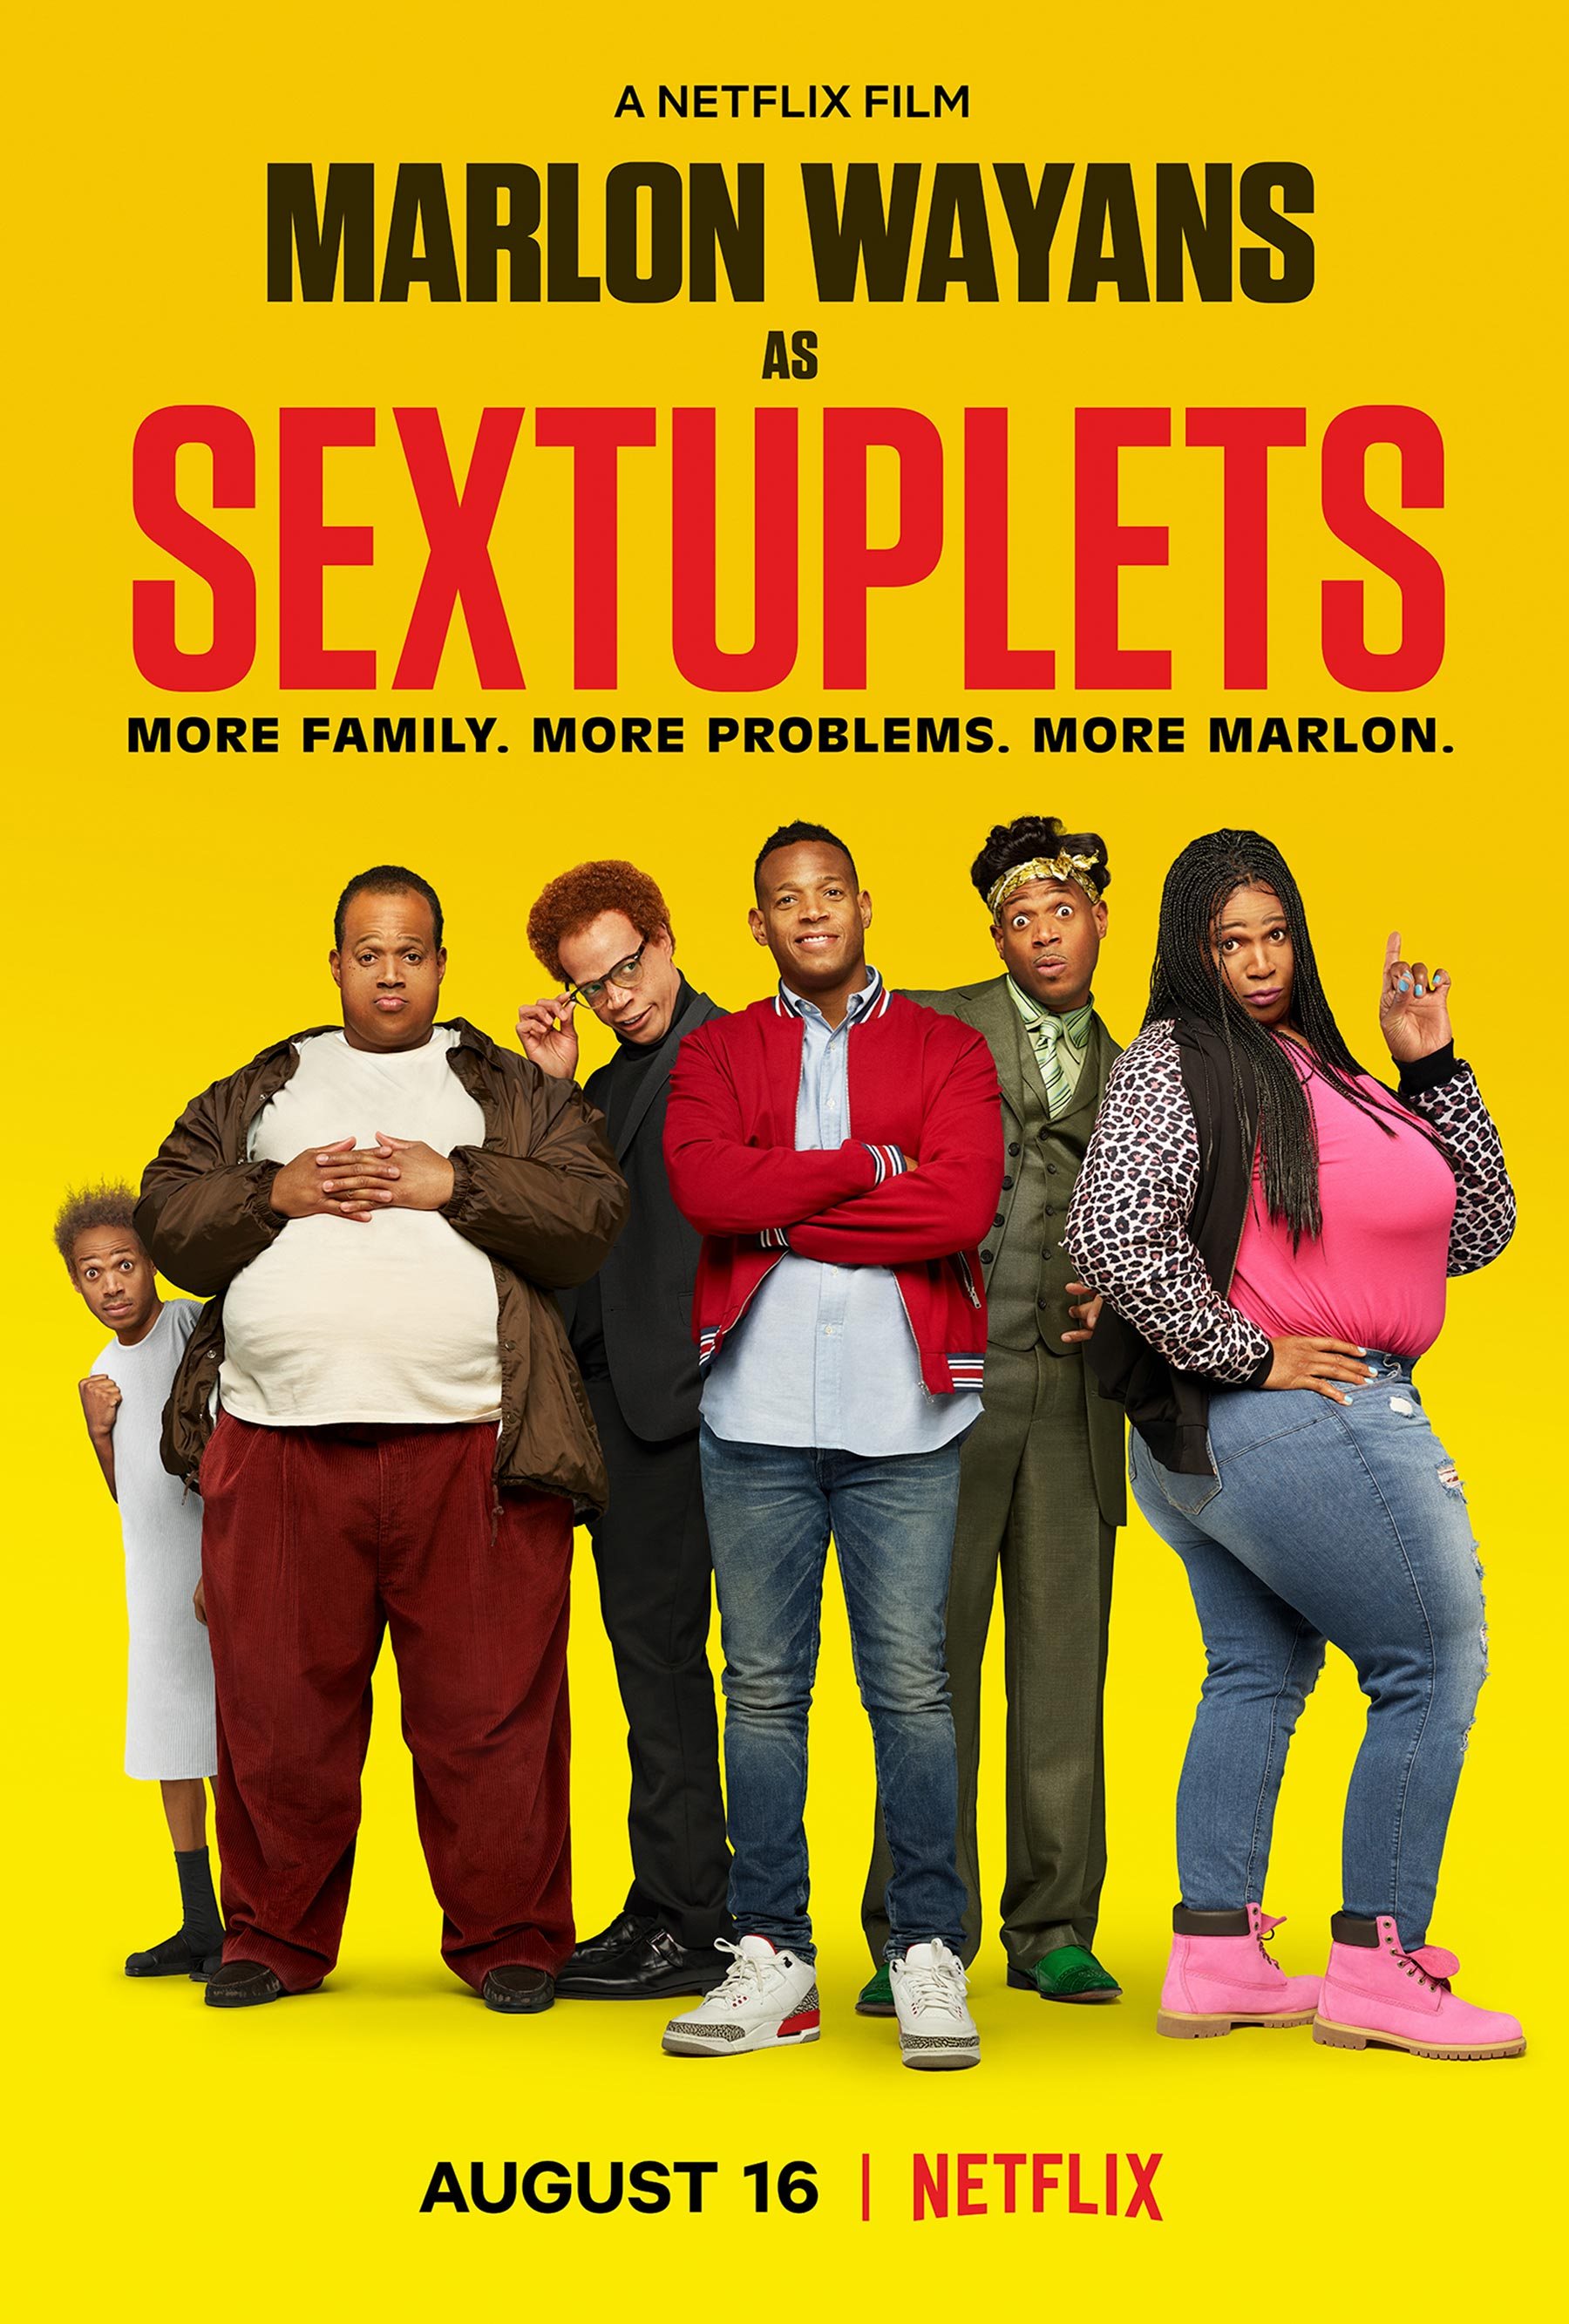 Sextuplets Netflix Movie With Marlon Wayans